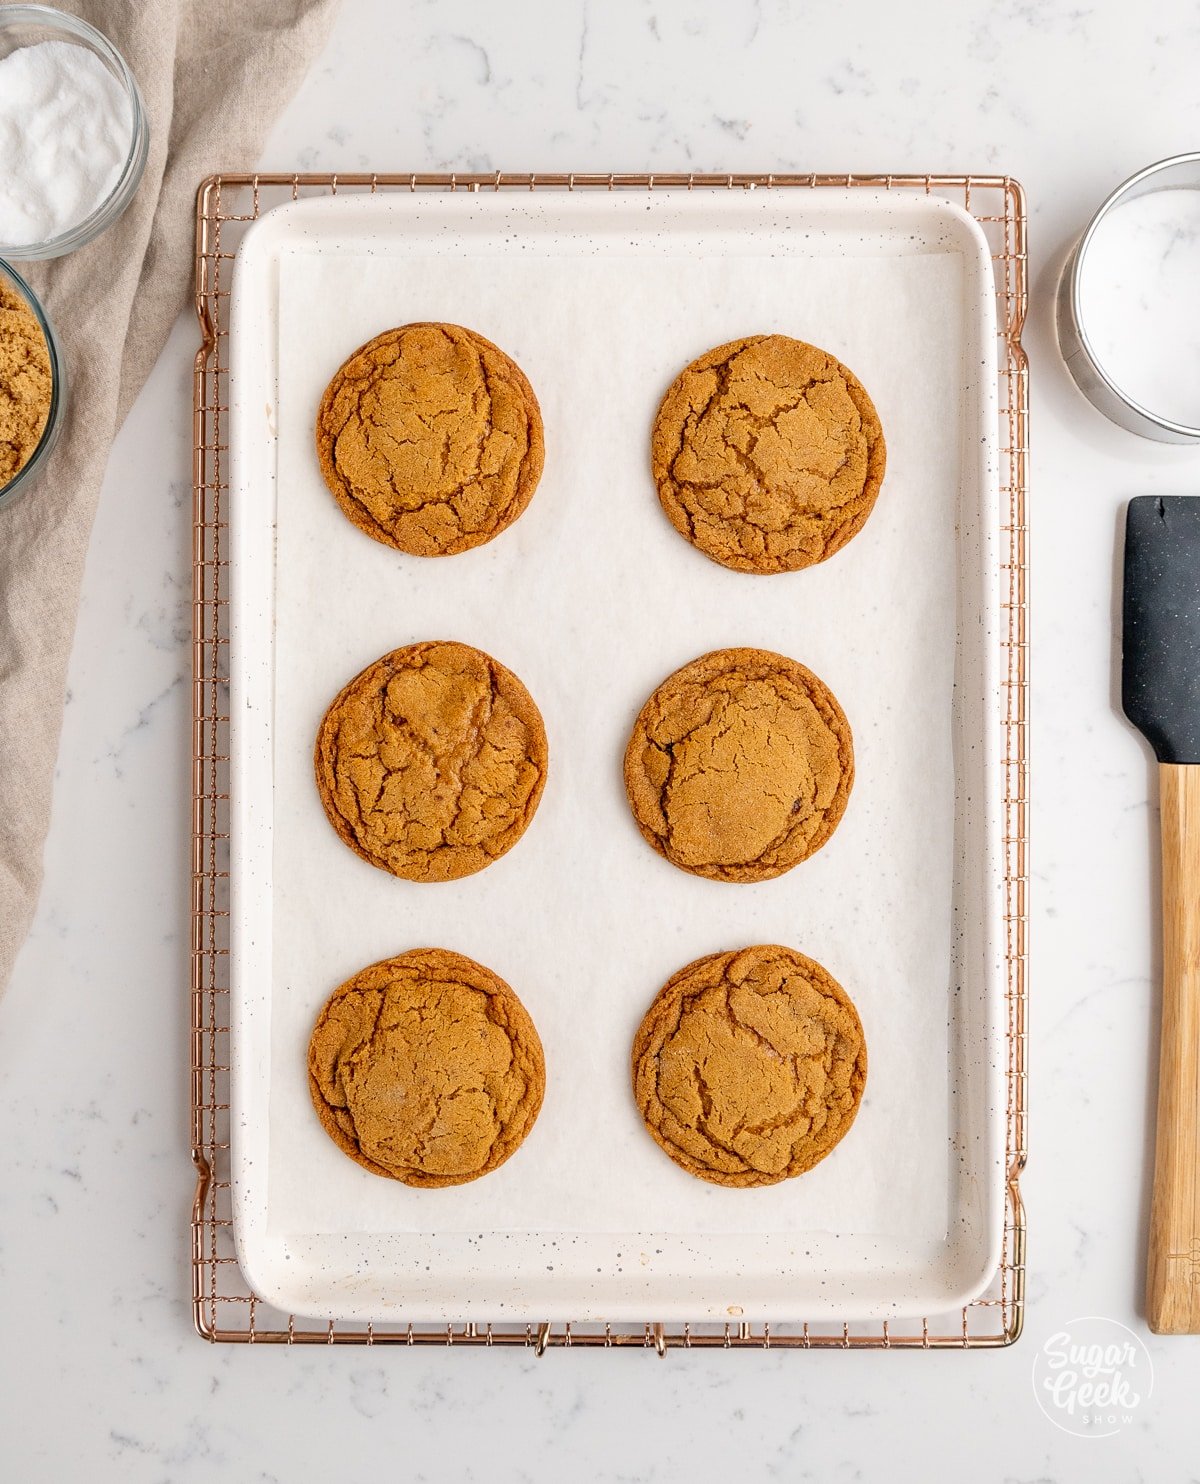 baked molasses cookies on a sheet pan